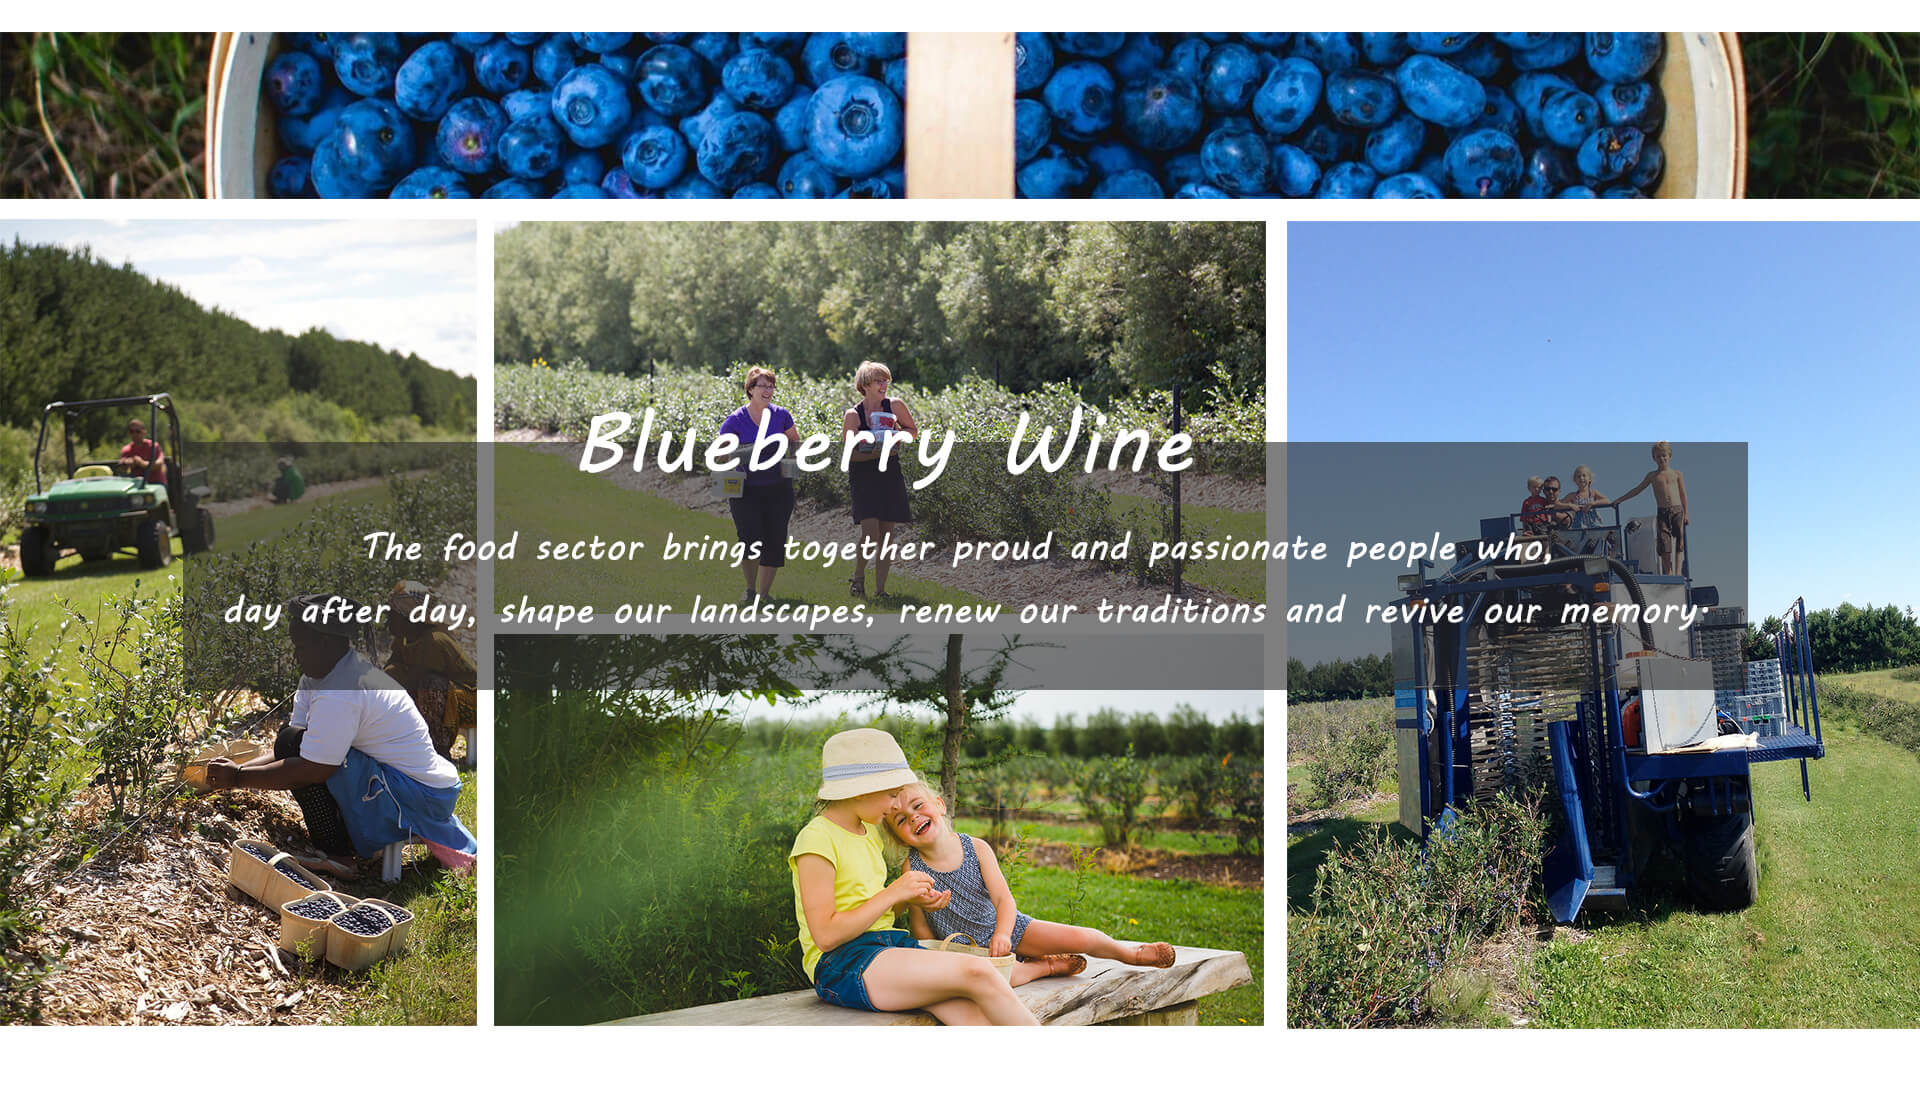 Blueberry wine pic